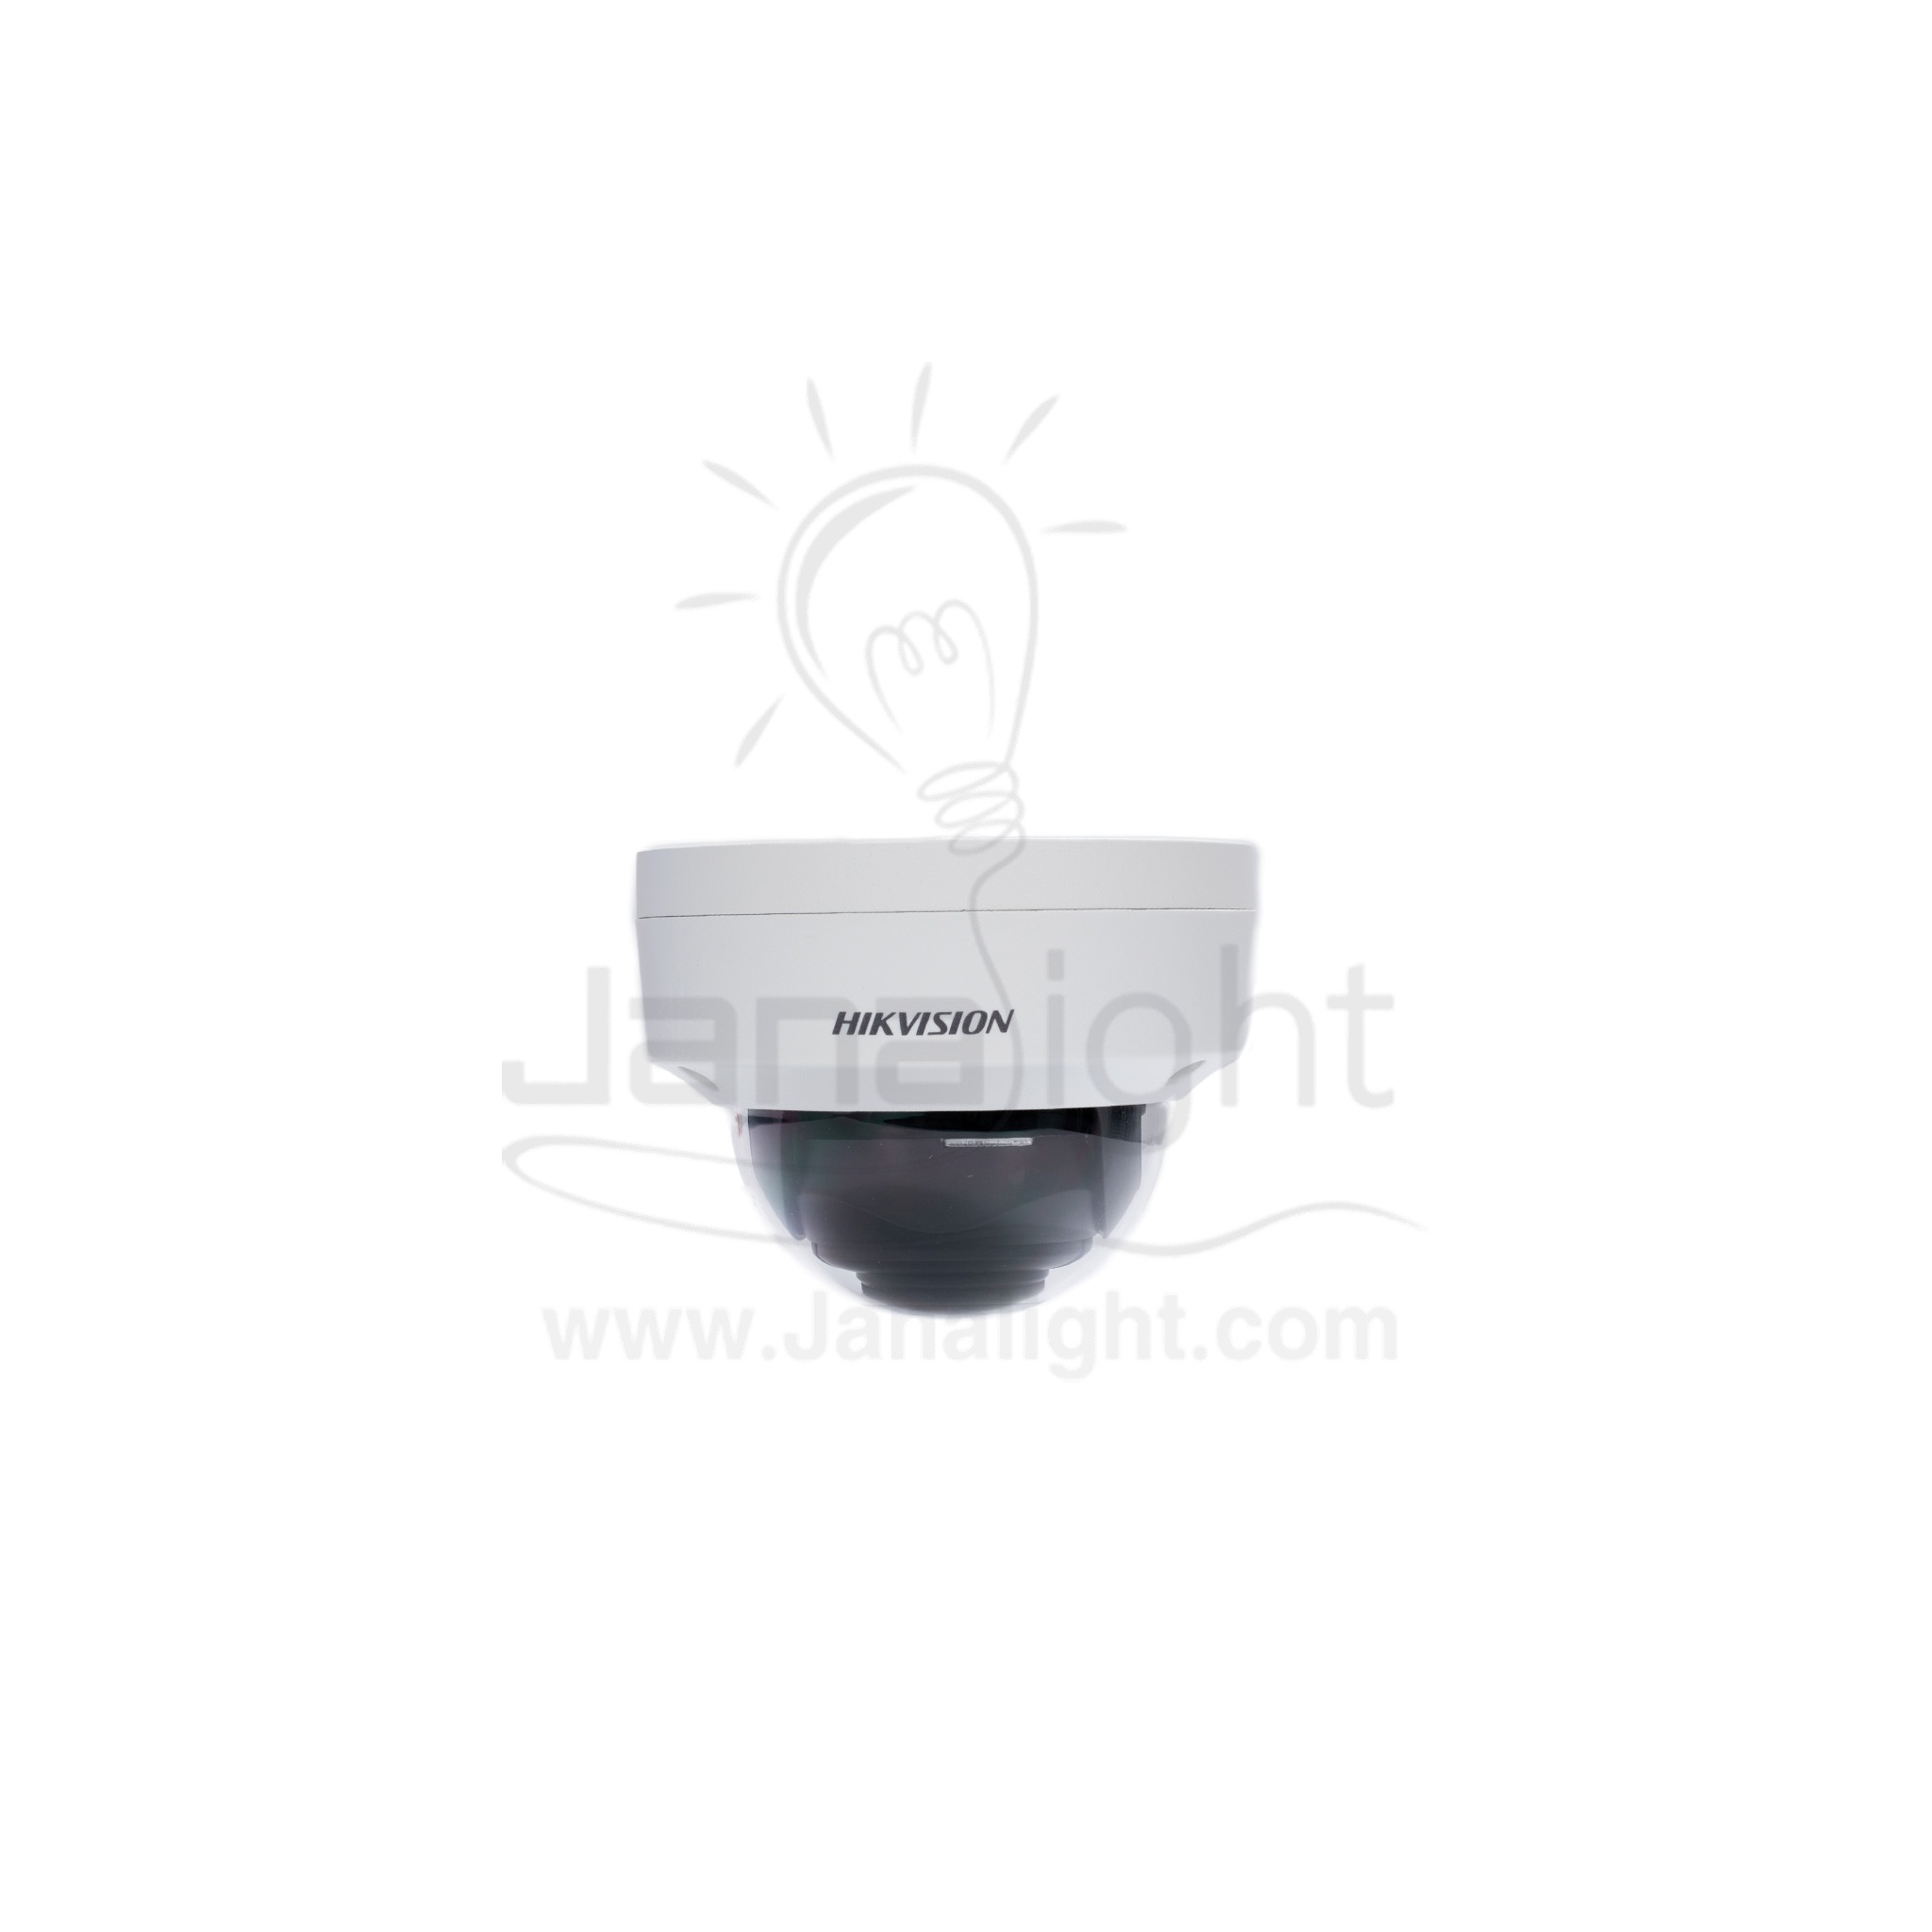 كاميرا داخلية IP هيكفيجن DS-2CD1123G0E-I 2.8mm 2MP Ip camera indoor hikvision 2mp 2.8mm